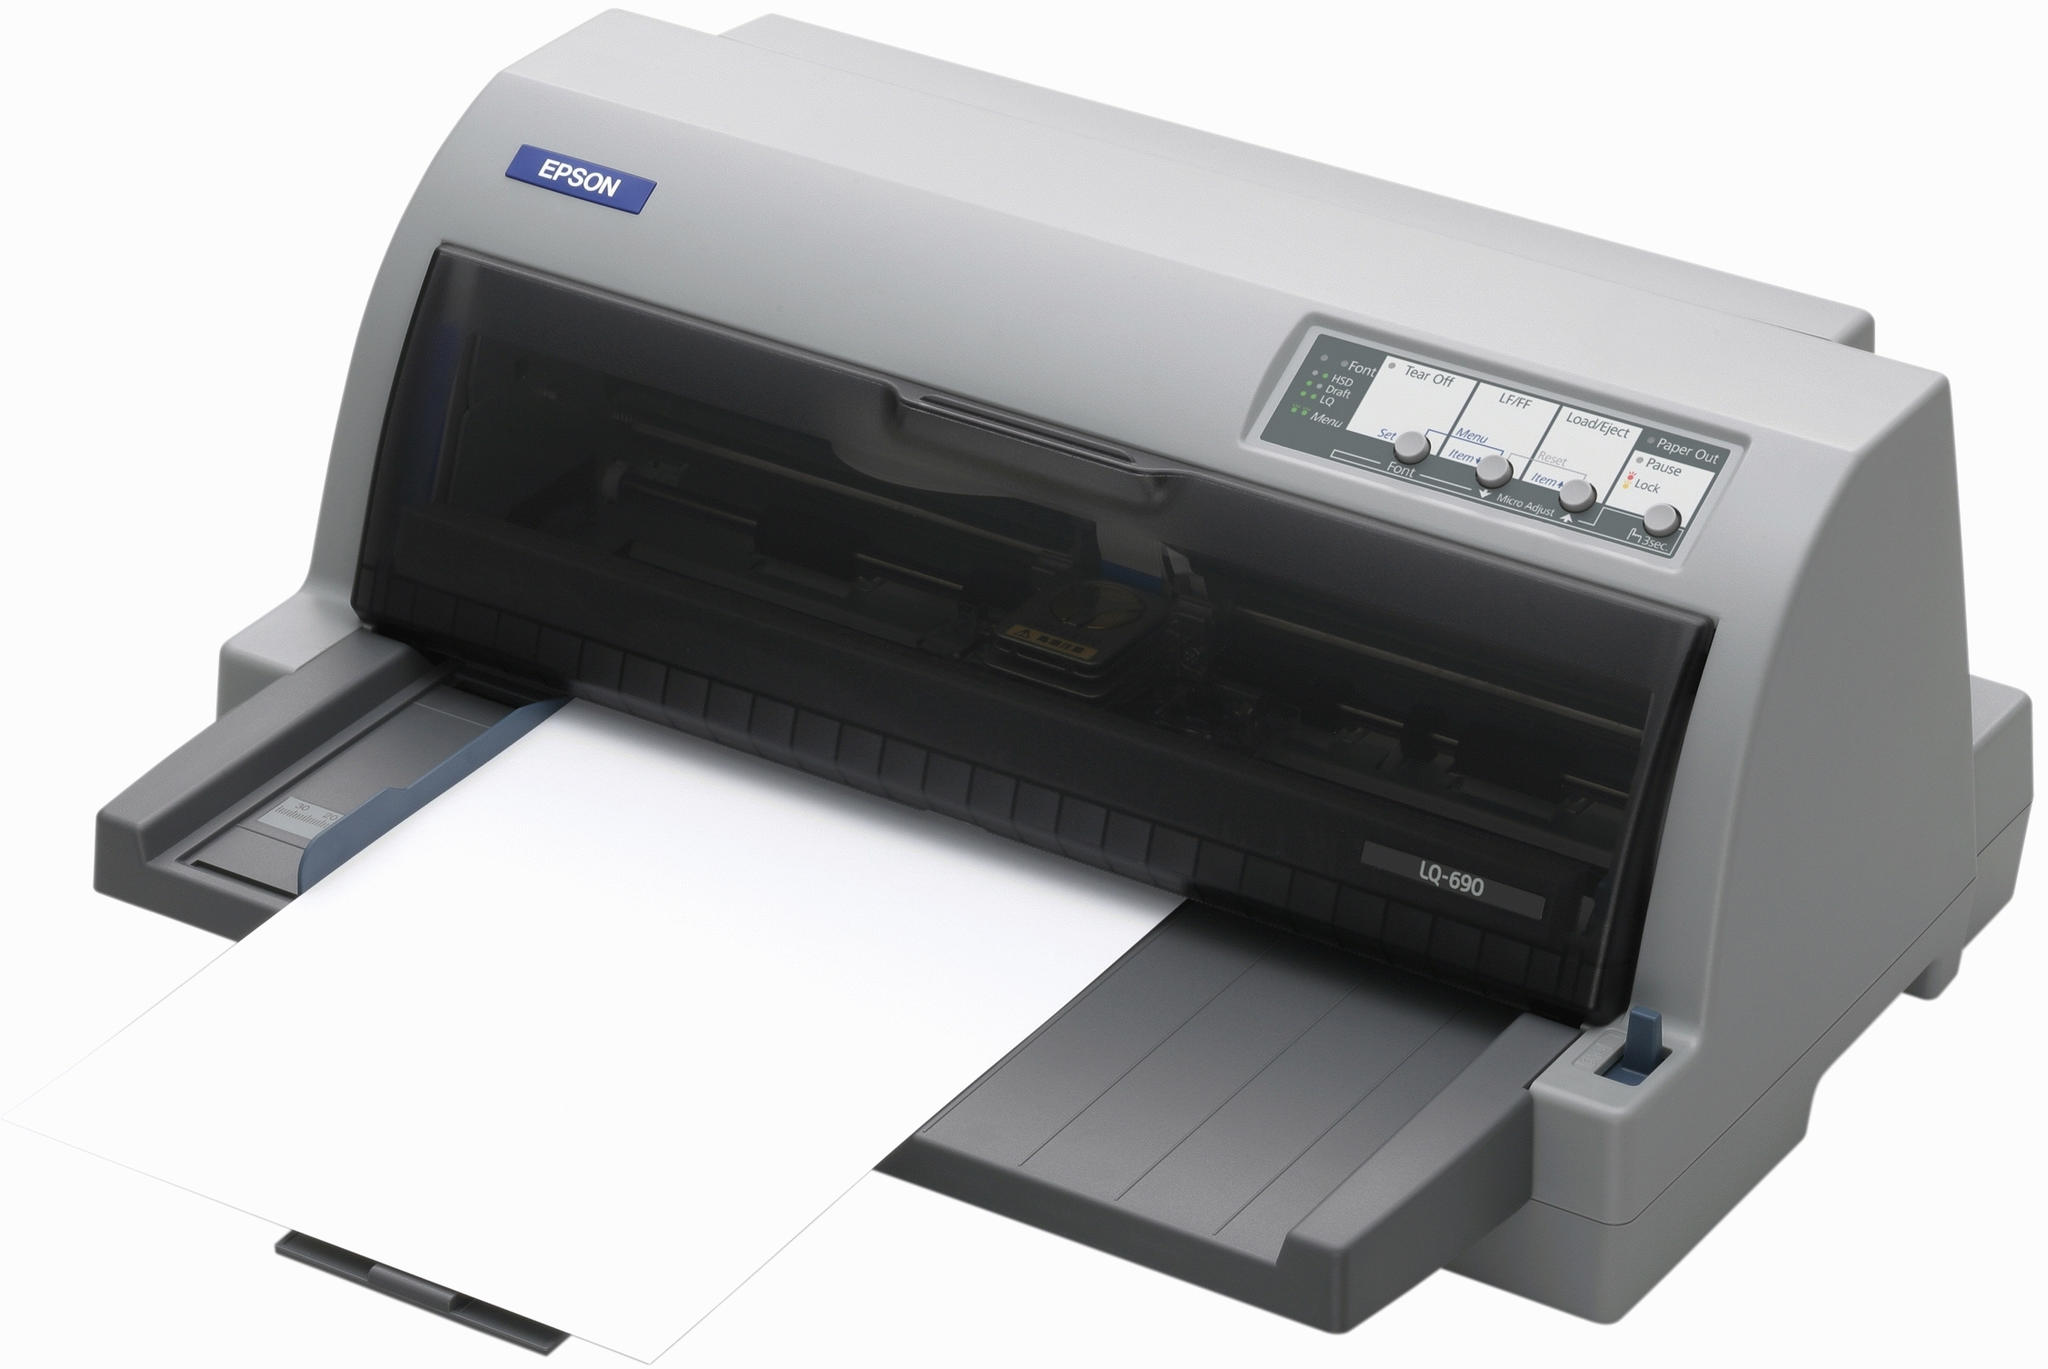 Epson LQ-690 Matrix printer - C11CA13041 - Yorcom